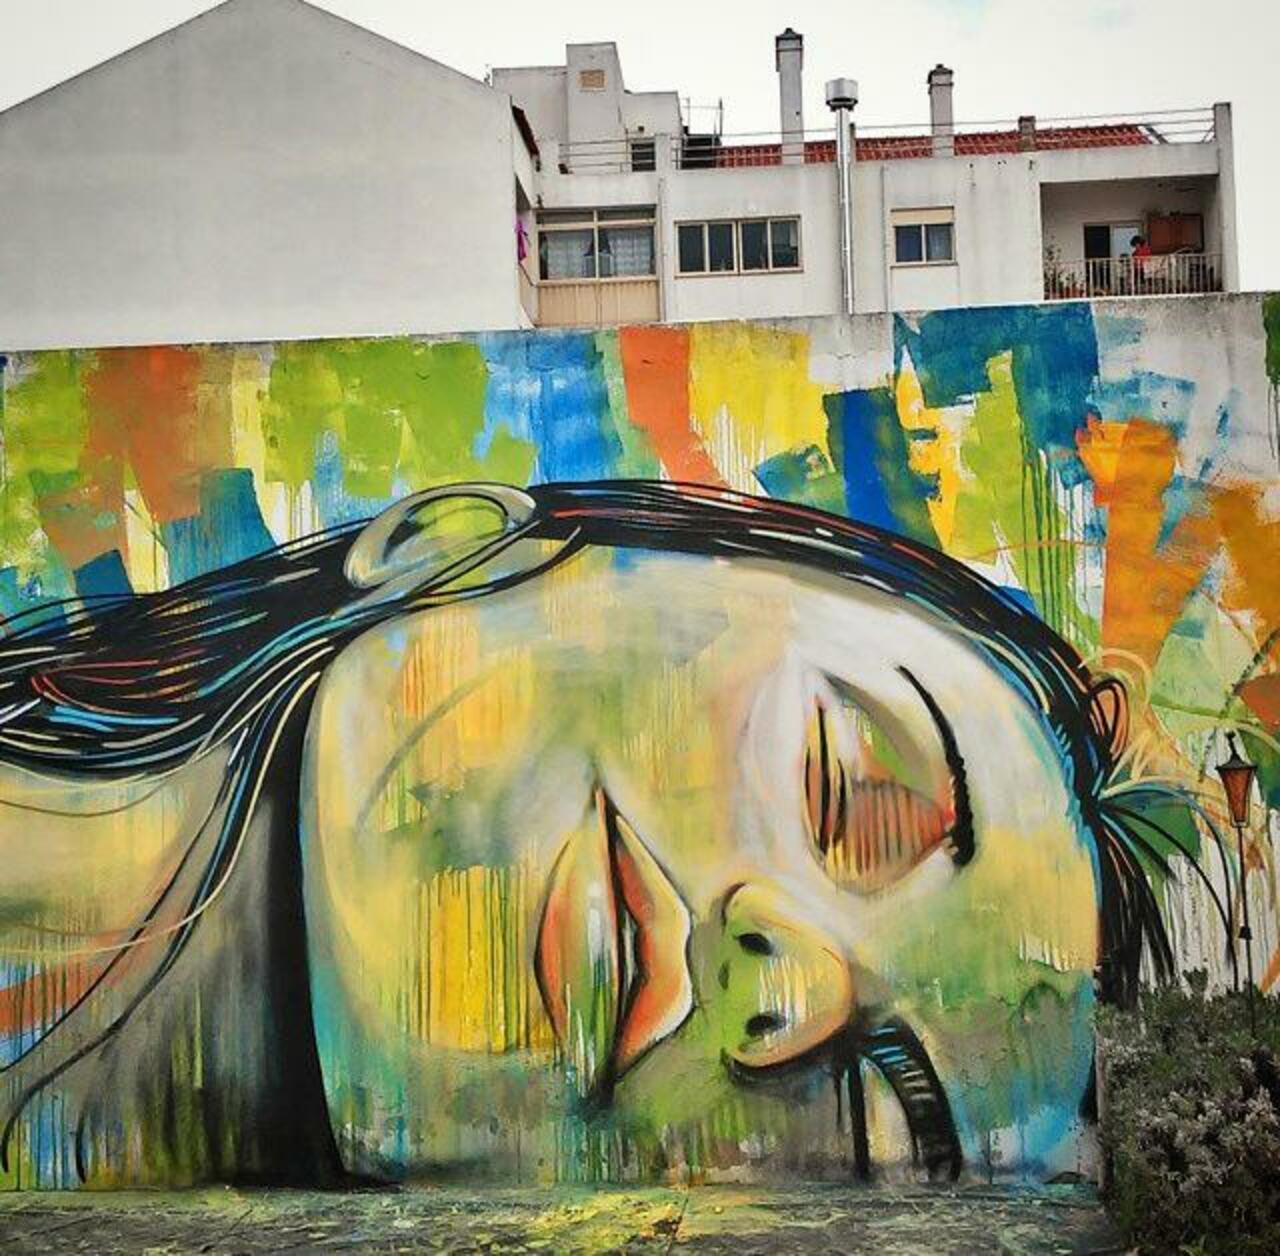 New Street Art wall in Ponte de Sor, Portugal by Alice Pasquini 

#art #arte #graffiti #streetart http://t.co/BcupM9G6Dt